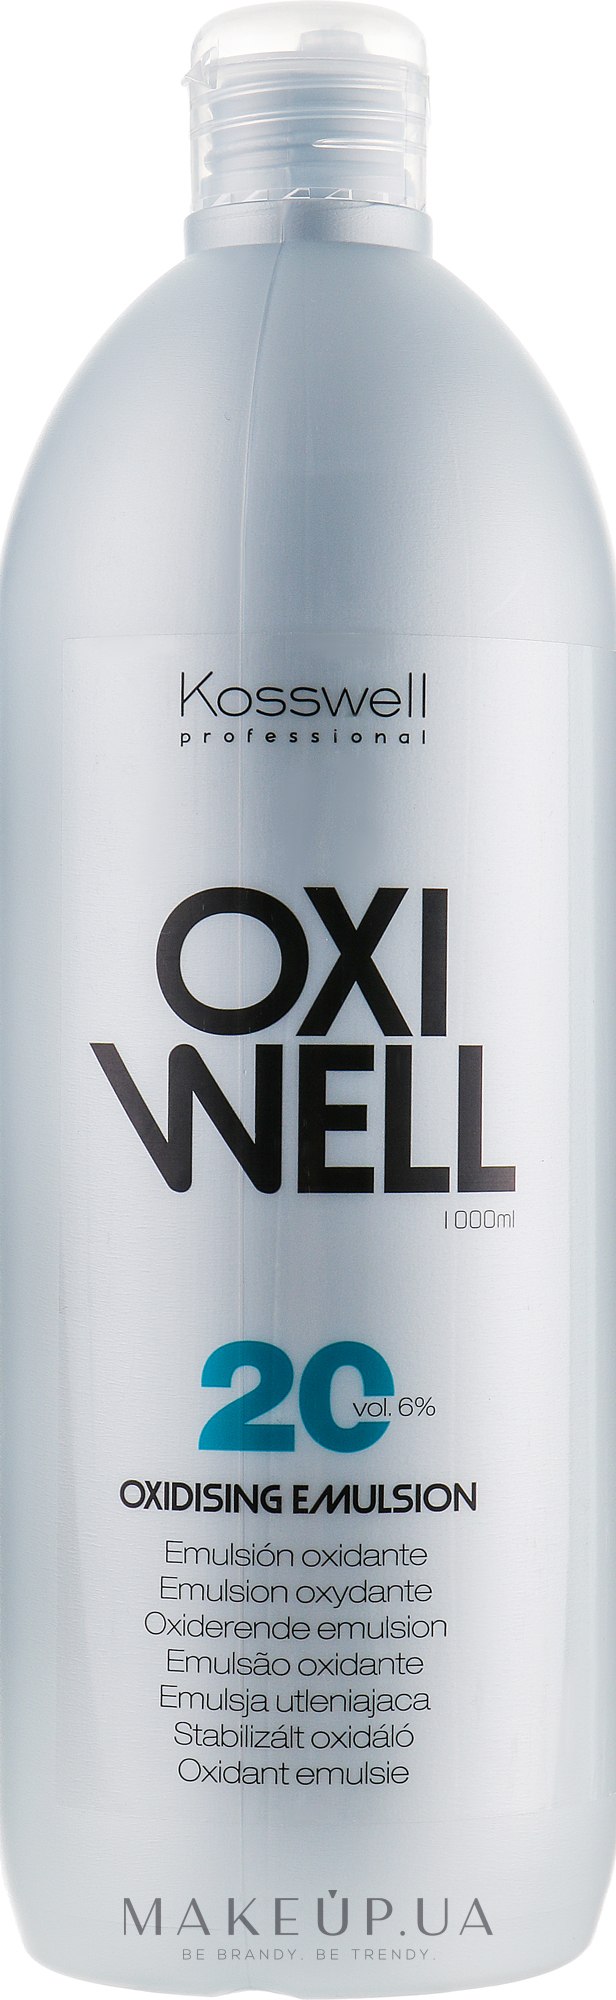 Окислительная эмульсия, 6% - Kosswell Professional Equium Oxidizing Emulsion Oxiwell 6% 20 vol — фото 1000ml